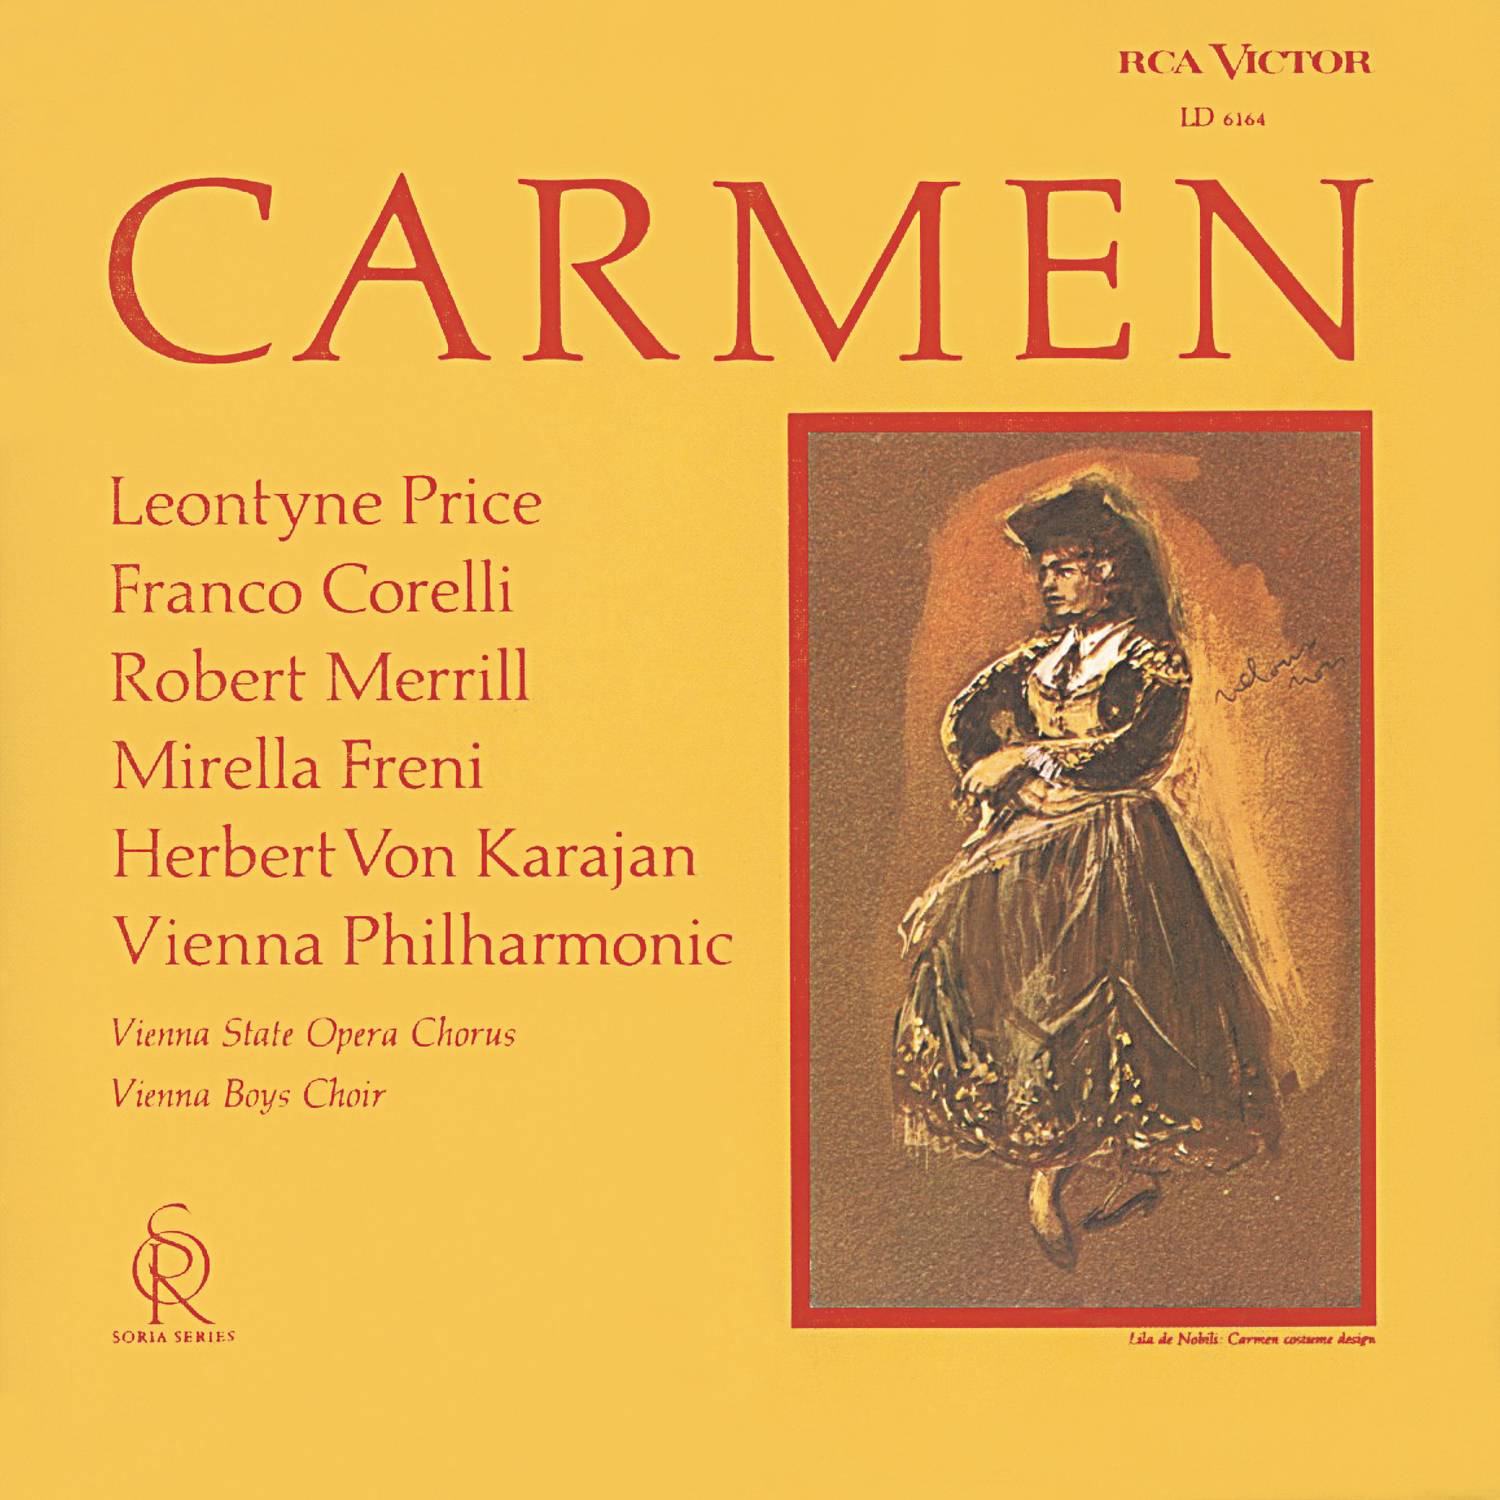 Carmen (Remastered): Act I - Avec la garde montante (2008 SACD Remastered)